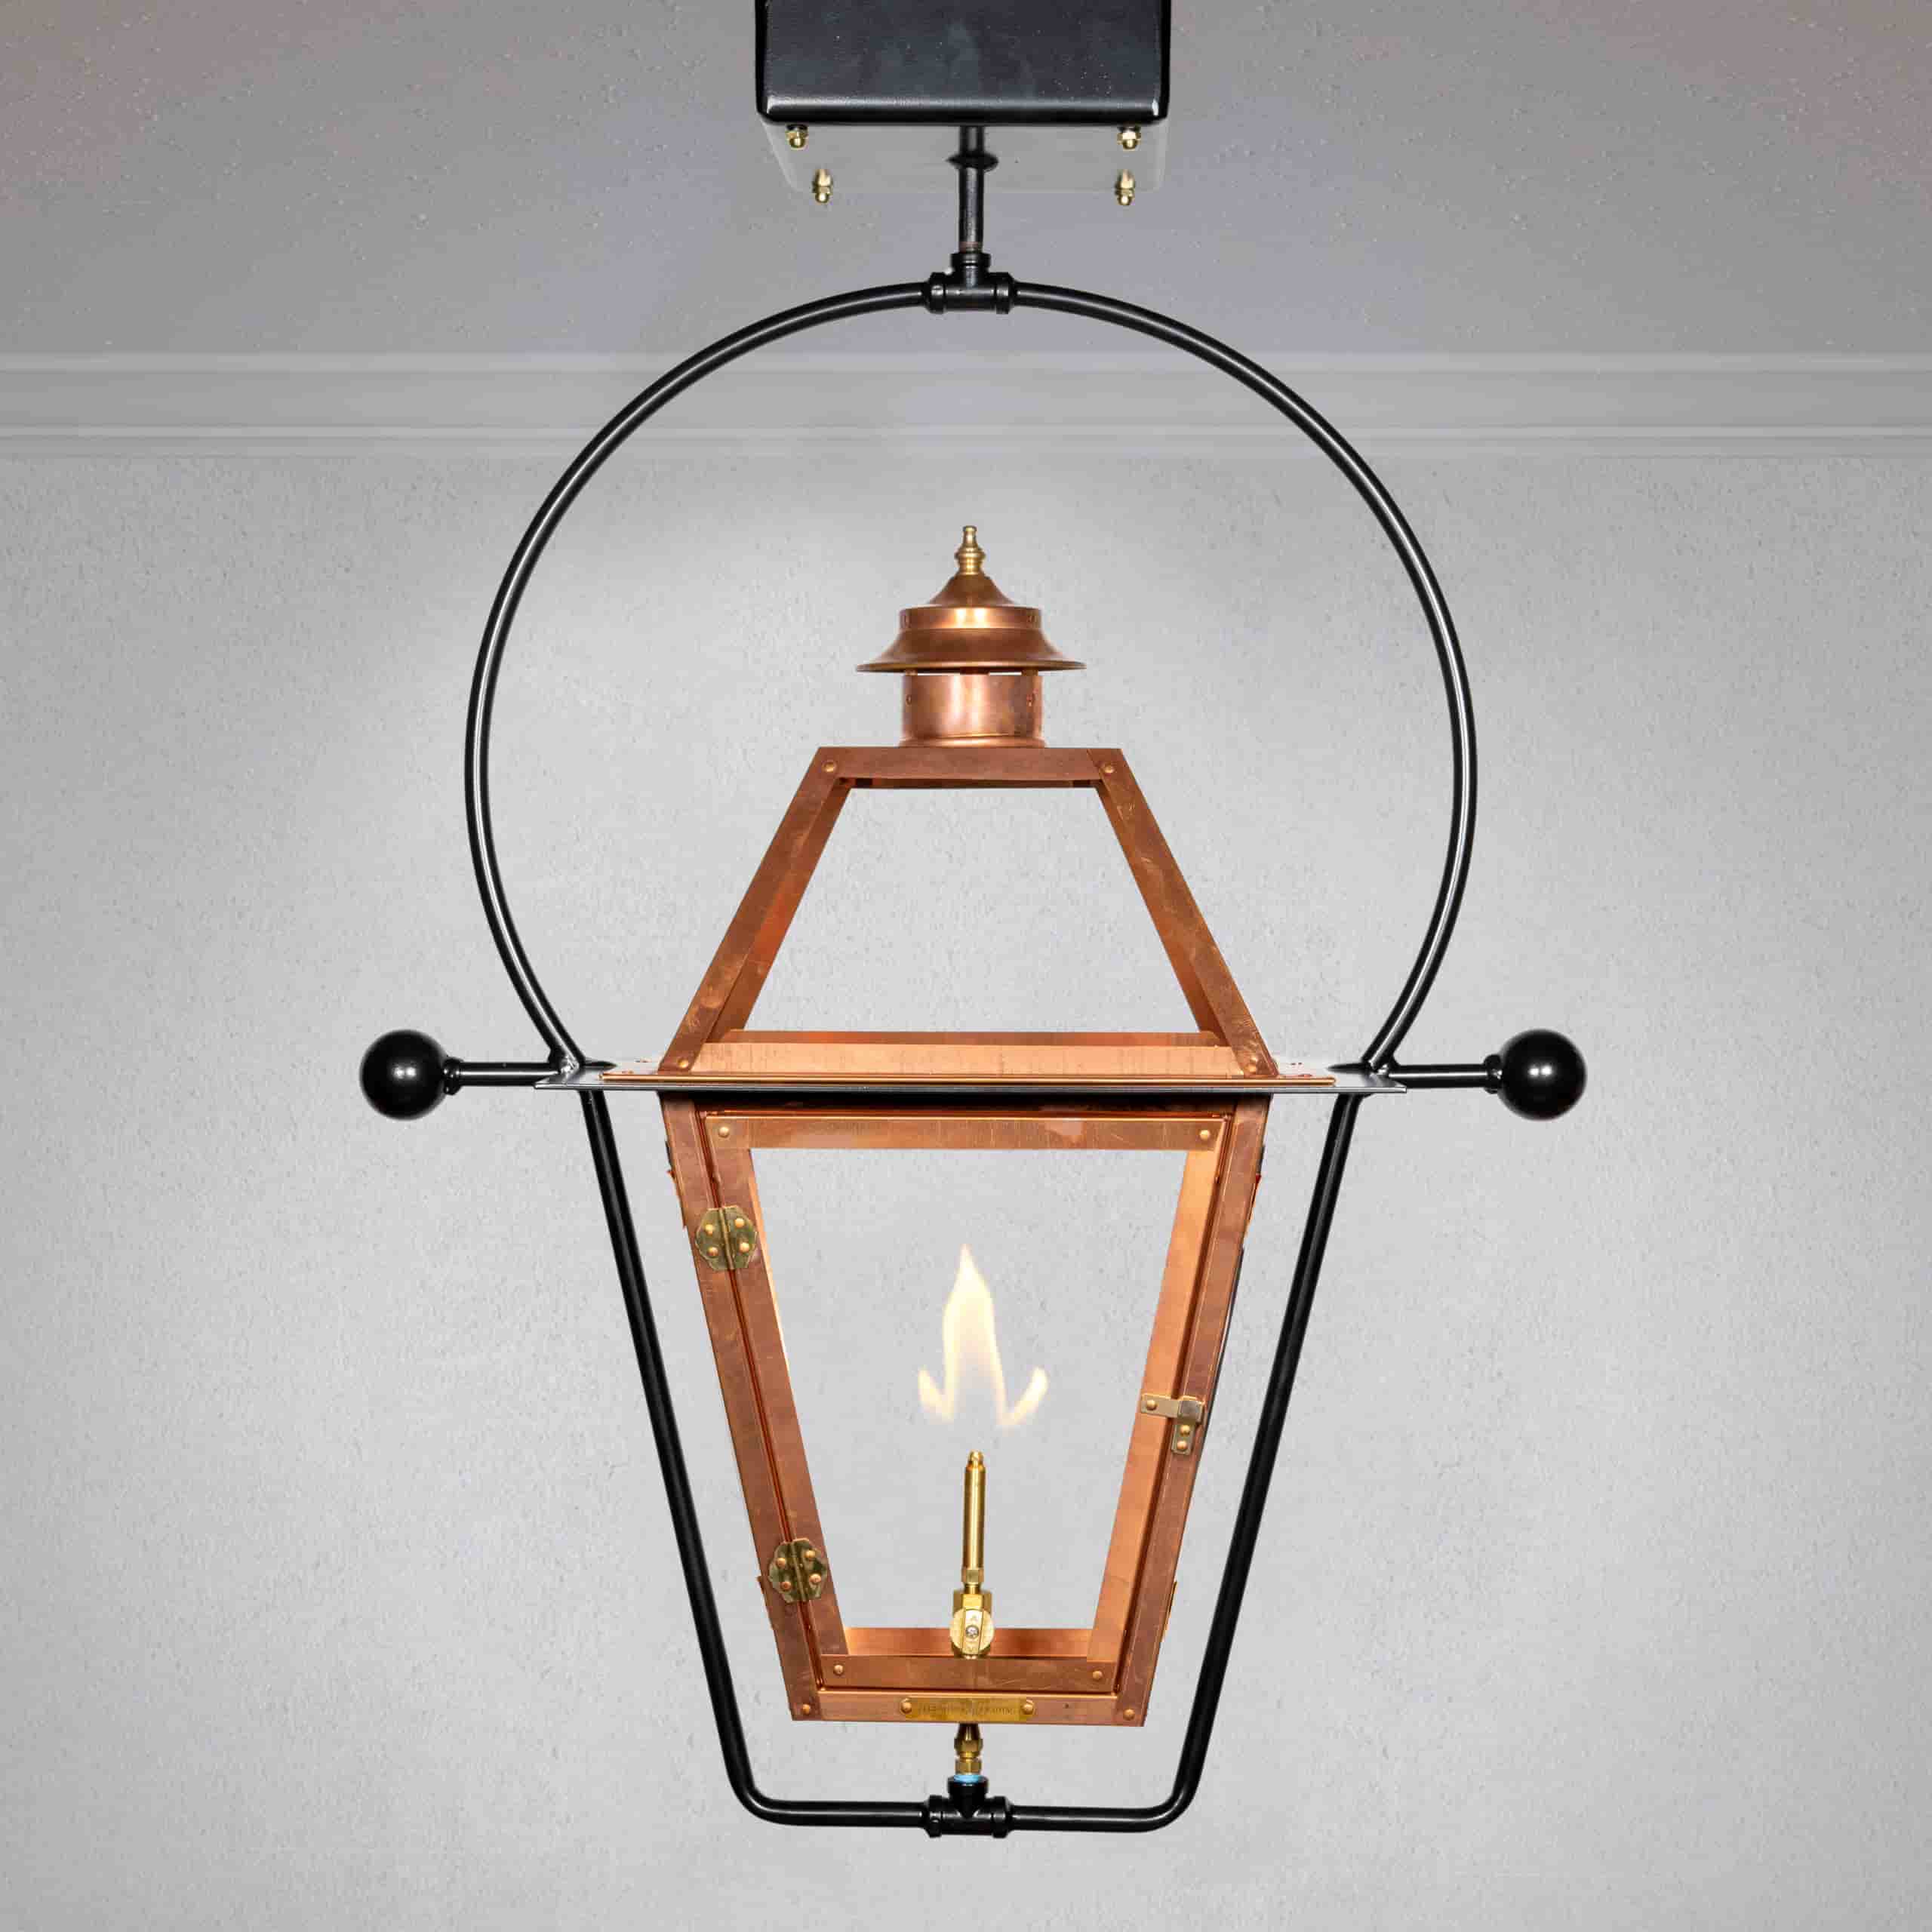 The Atlas Copper Lamp